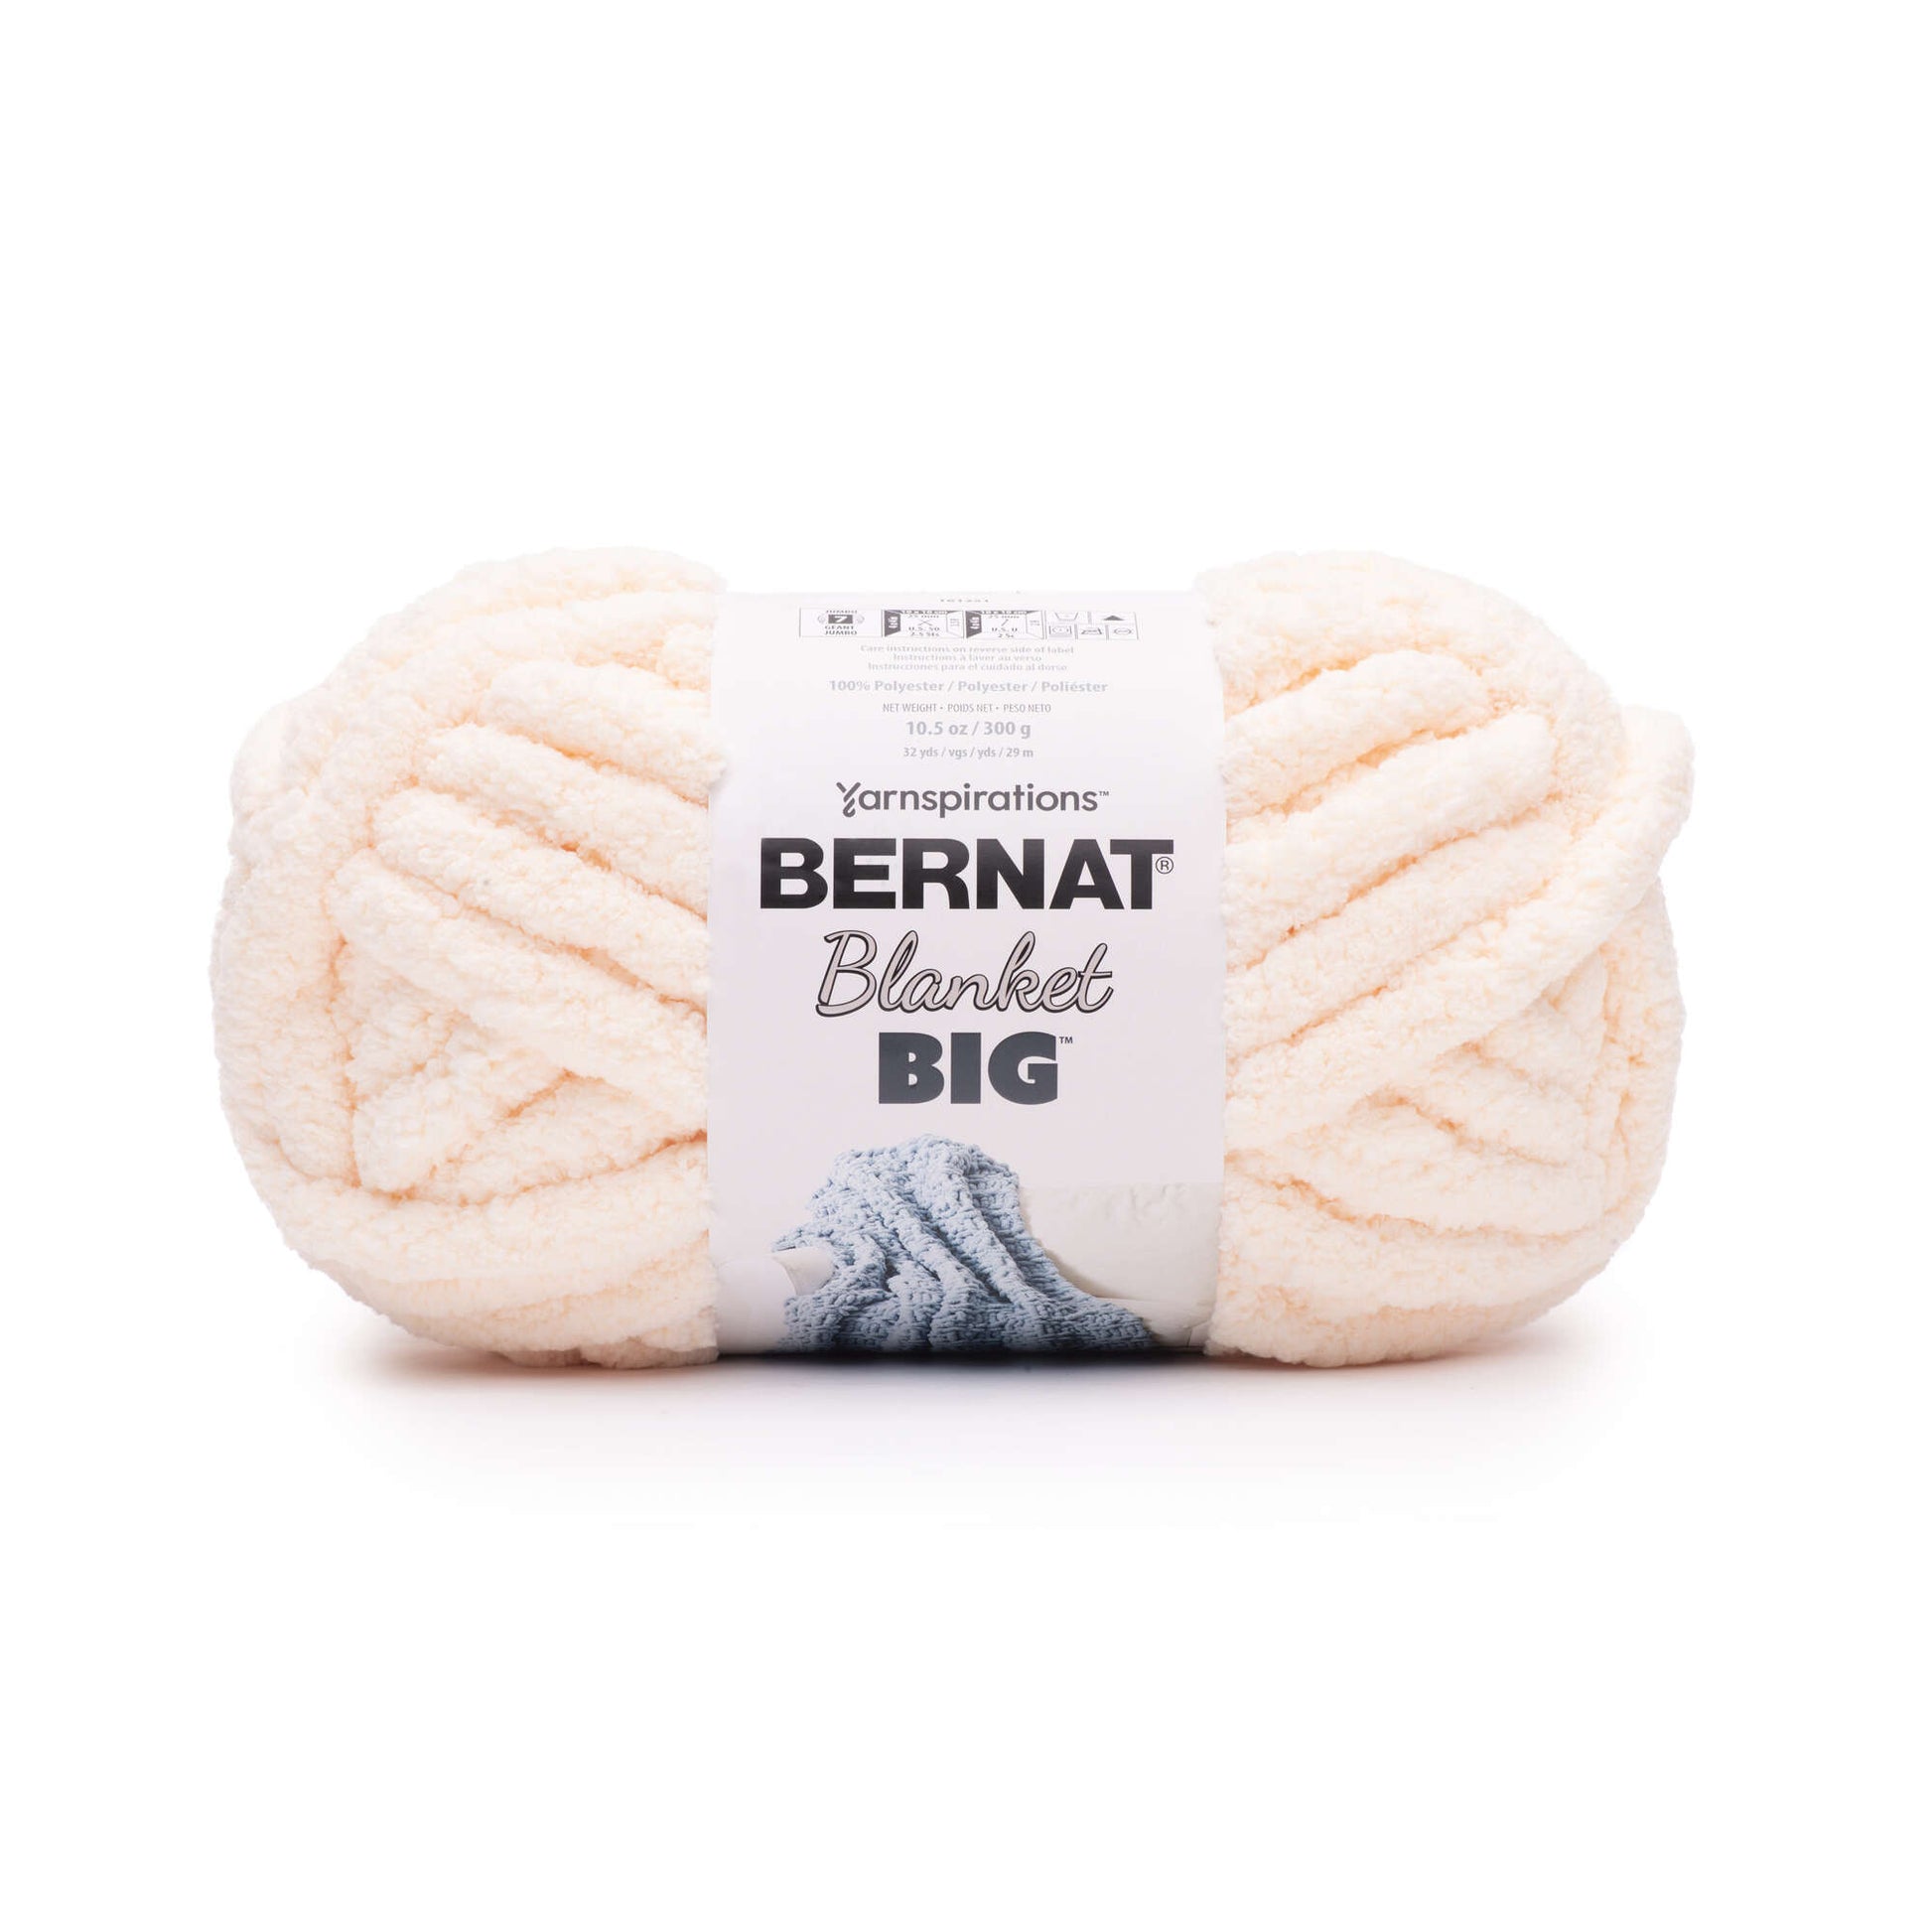 Bernat Blanket Big Yarn (300g/10.5oz) Flax